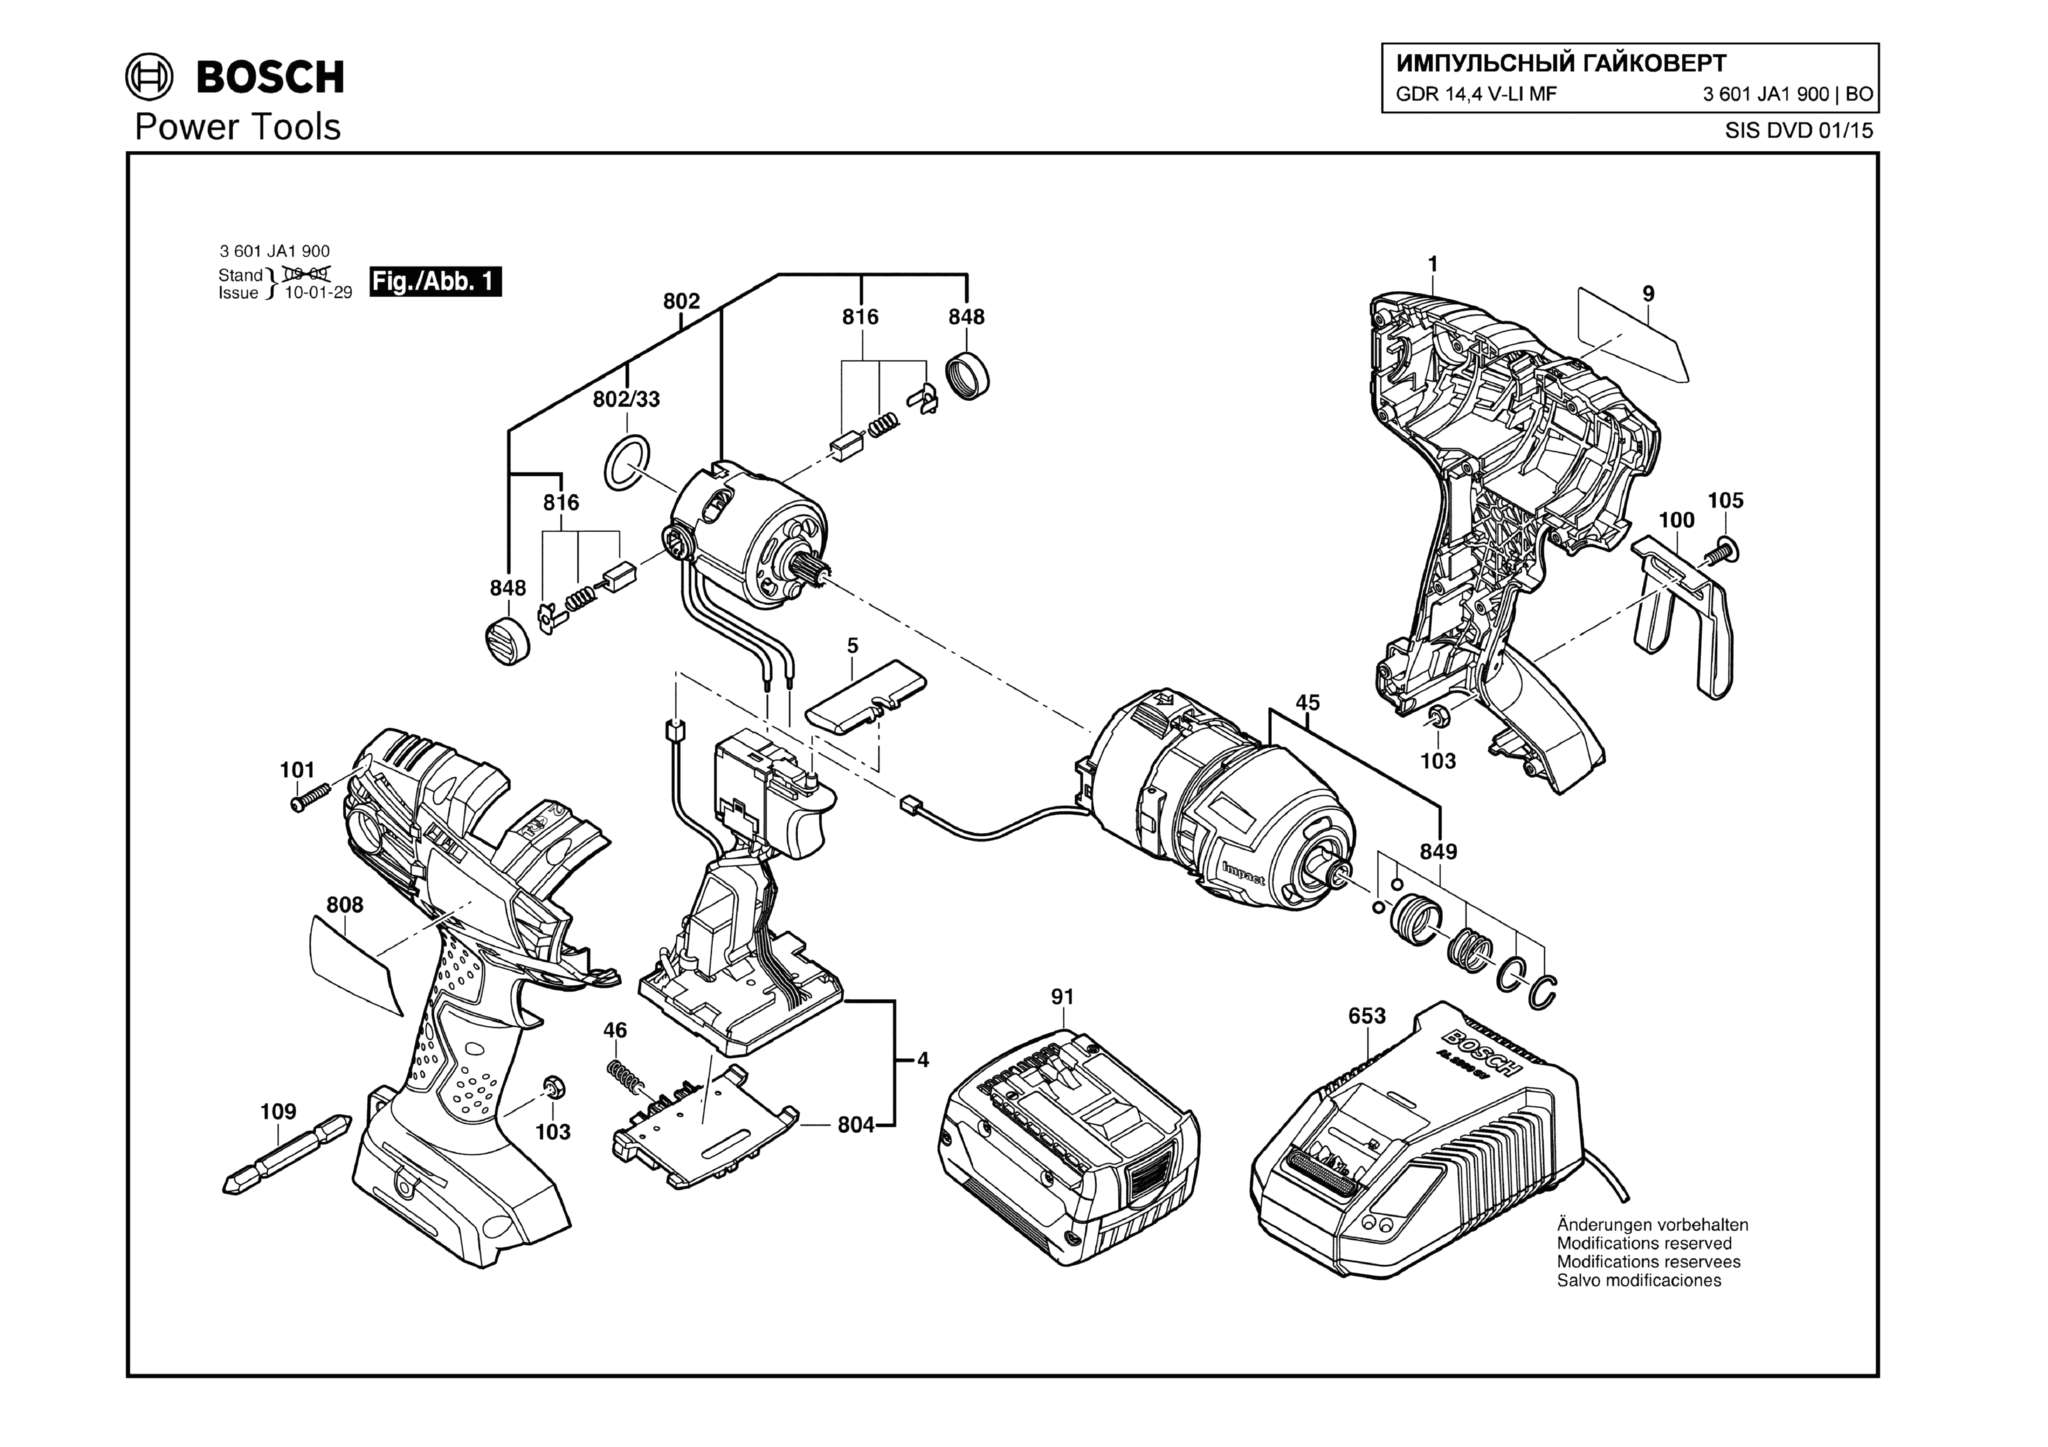 Запчасти, схема и деталировка Bosch GDR 14,4 V-LI MF (ТИП 3601JA1900)